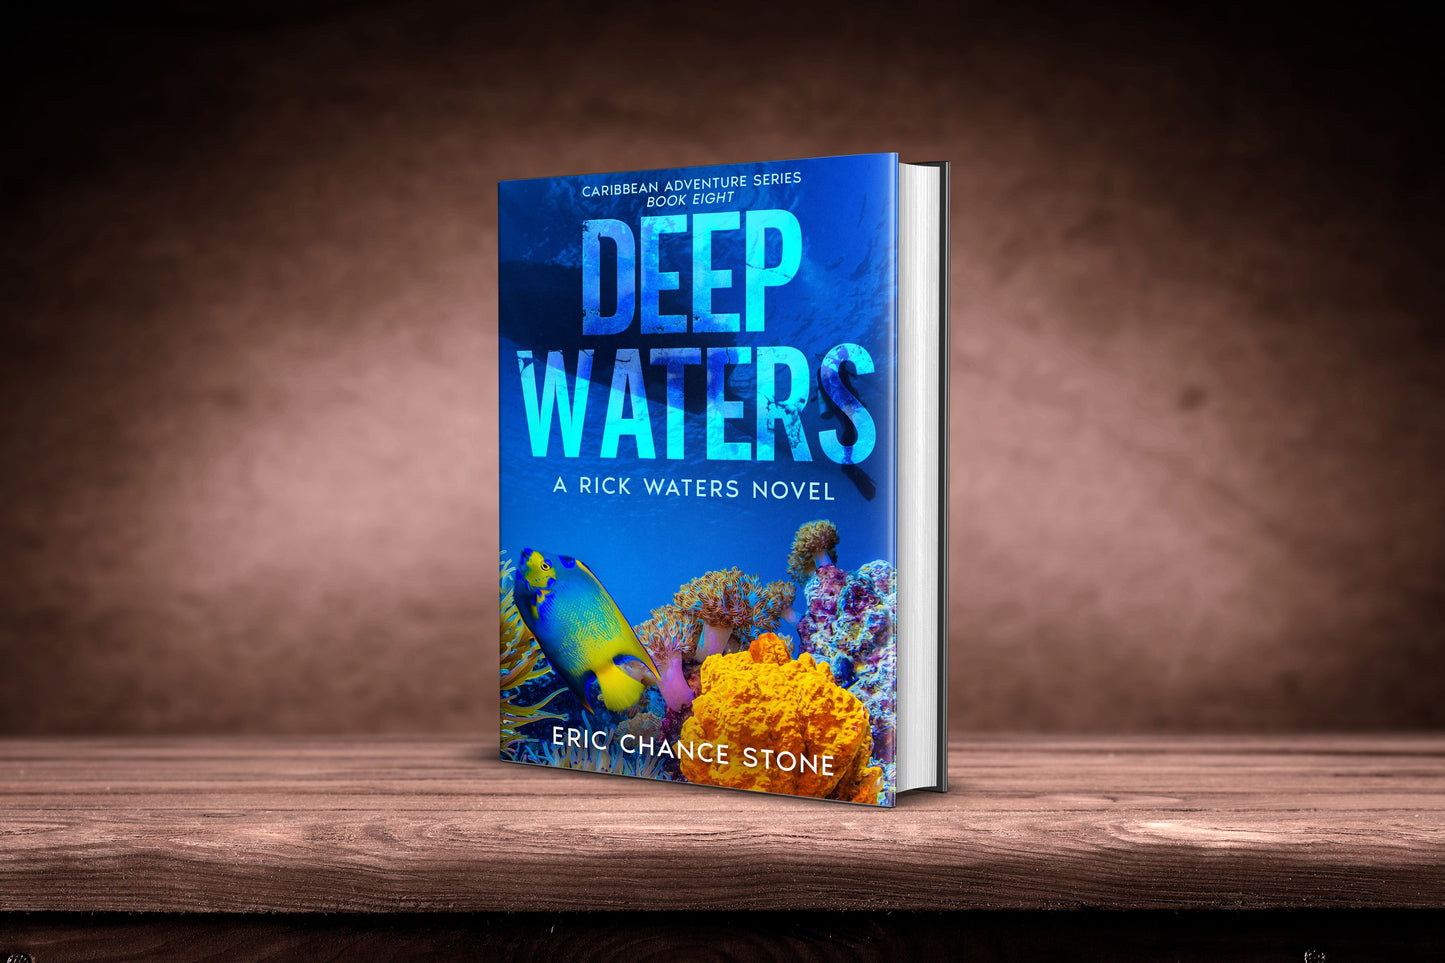 Deep Waters Paperback - Book 8: A Rick Waters Novel (Caribbean Adventure Series)